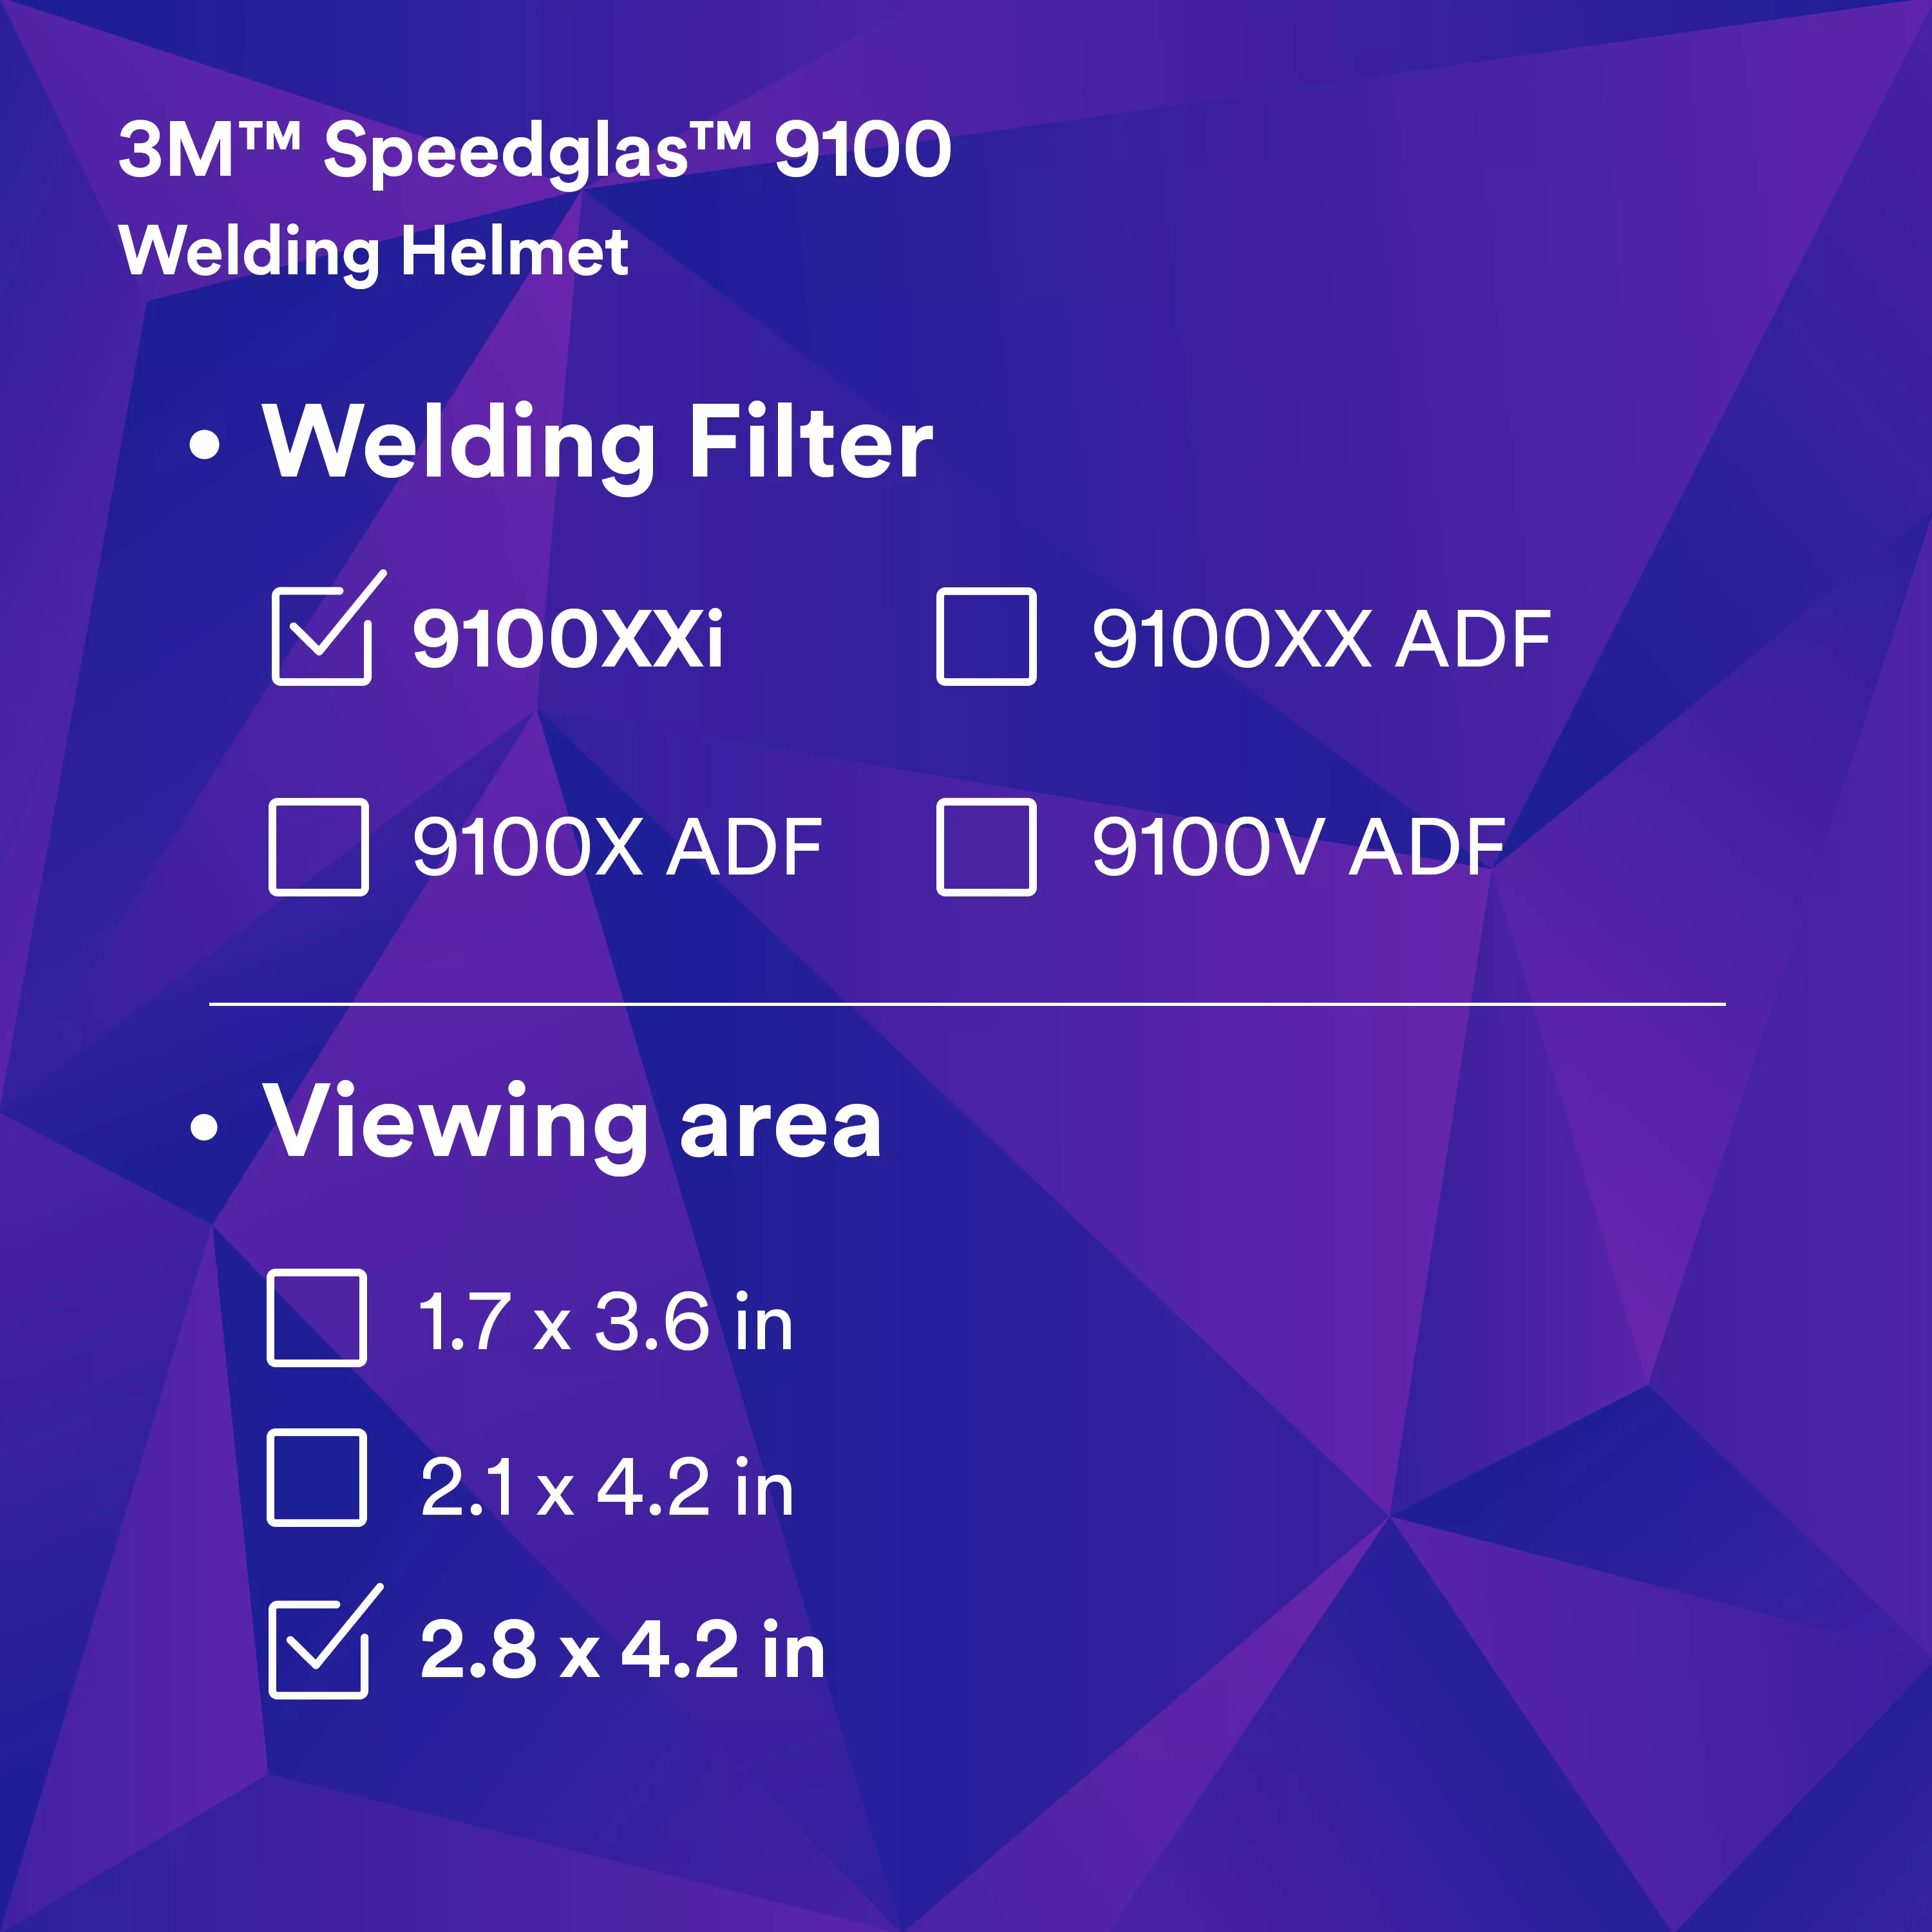 SKU 7010385388 | 3M™ Speedglas™ 9100XXi Auto Darkening Filter with Silver Front Panel
06-0000-30i-KIT